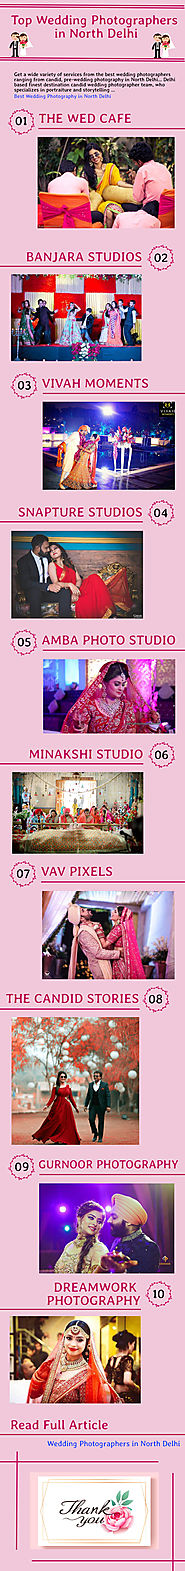 Top Wedding Photographers in North Delhi | Infographic